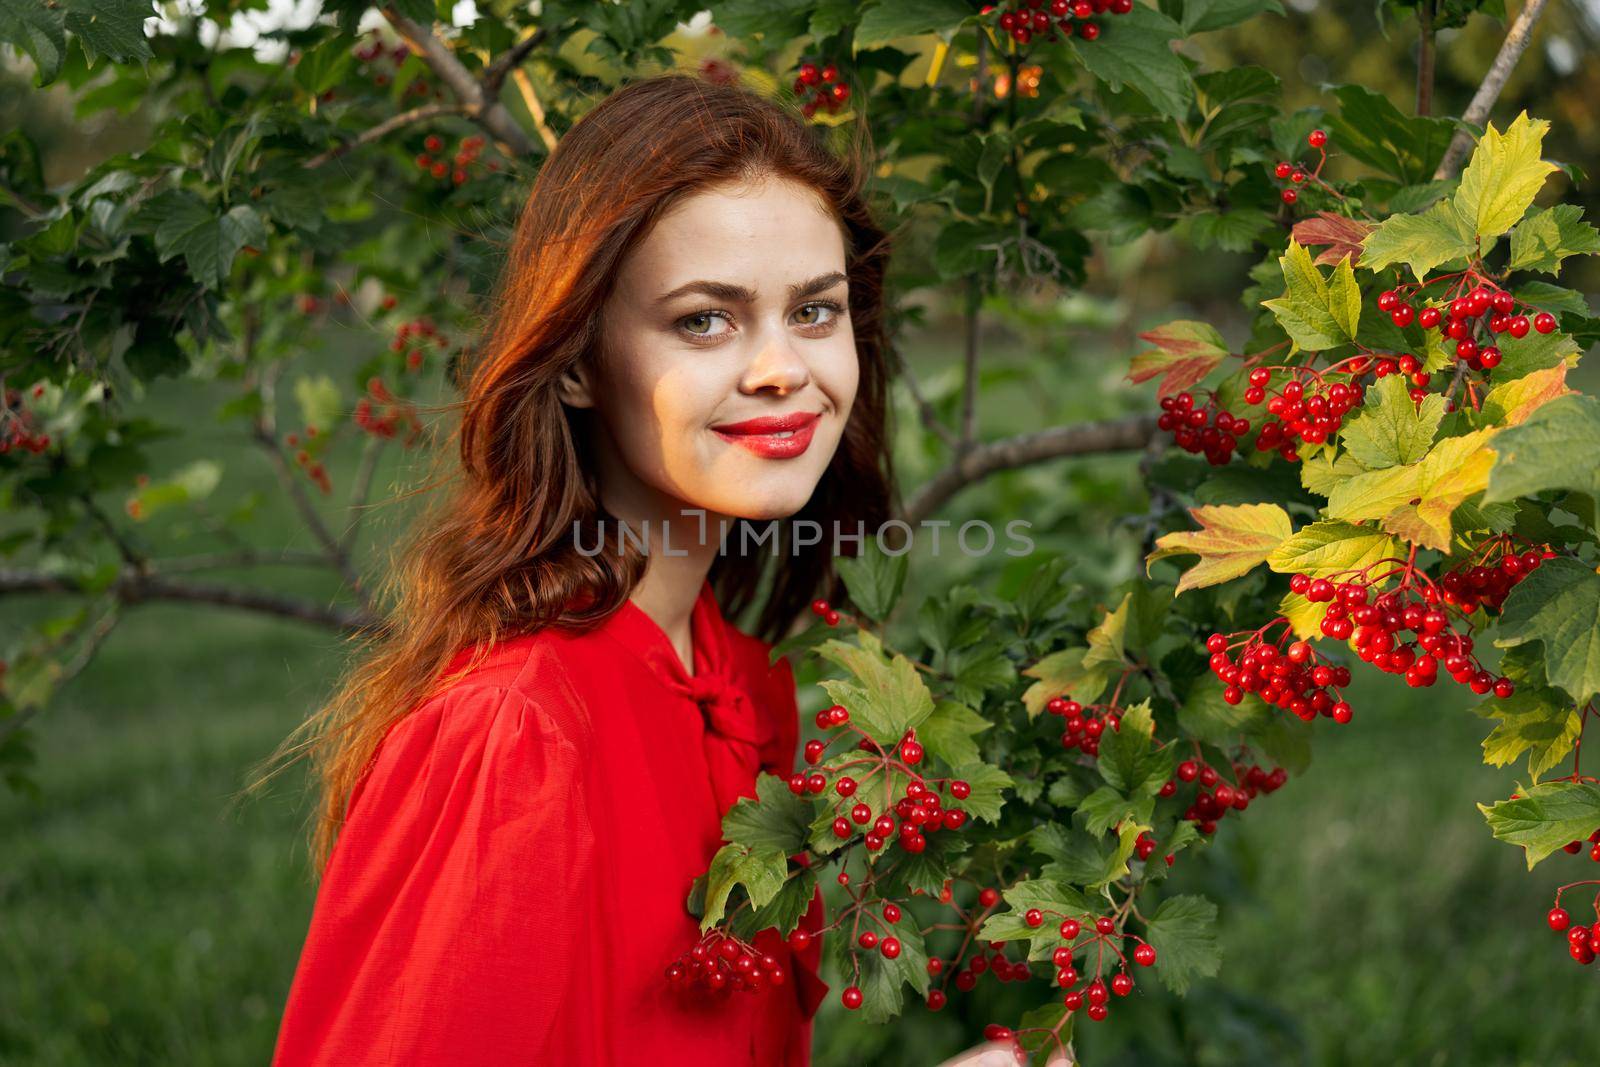 cheerful woman eating berries outdoors fresh air. High quality photo